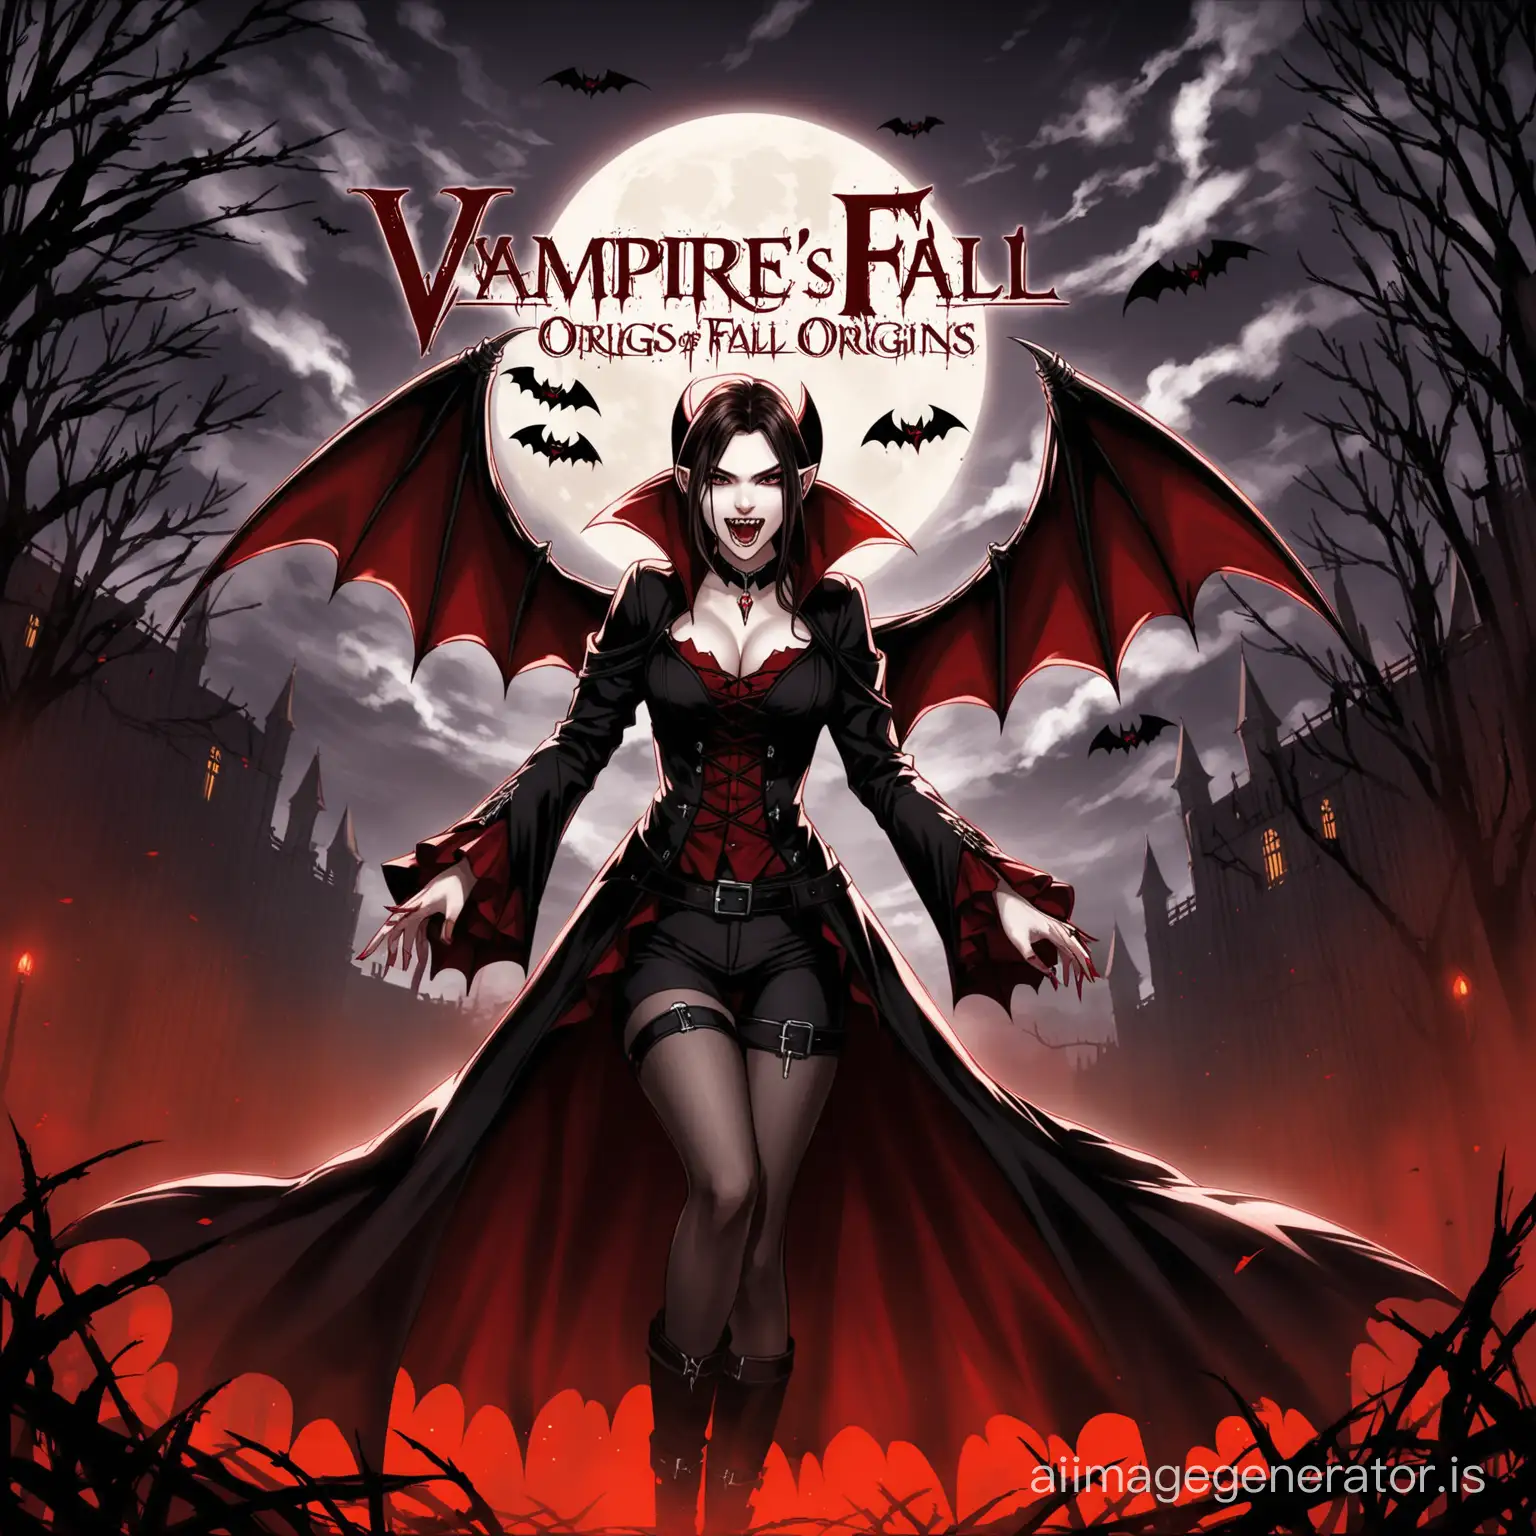 Vampire's fall origins